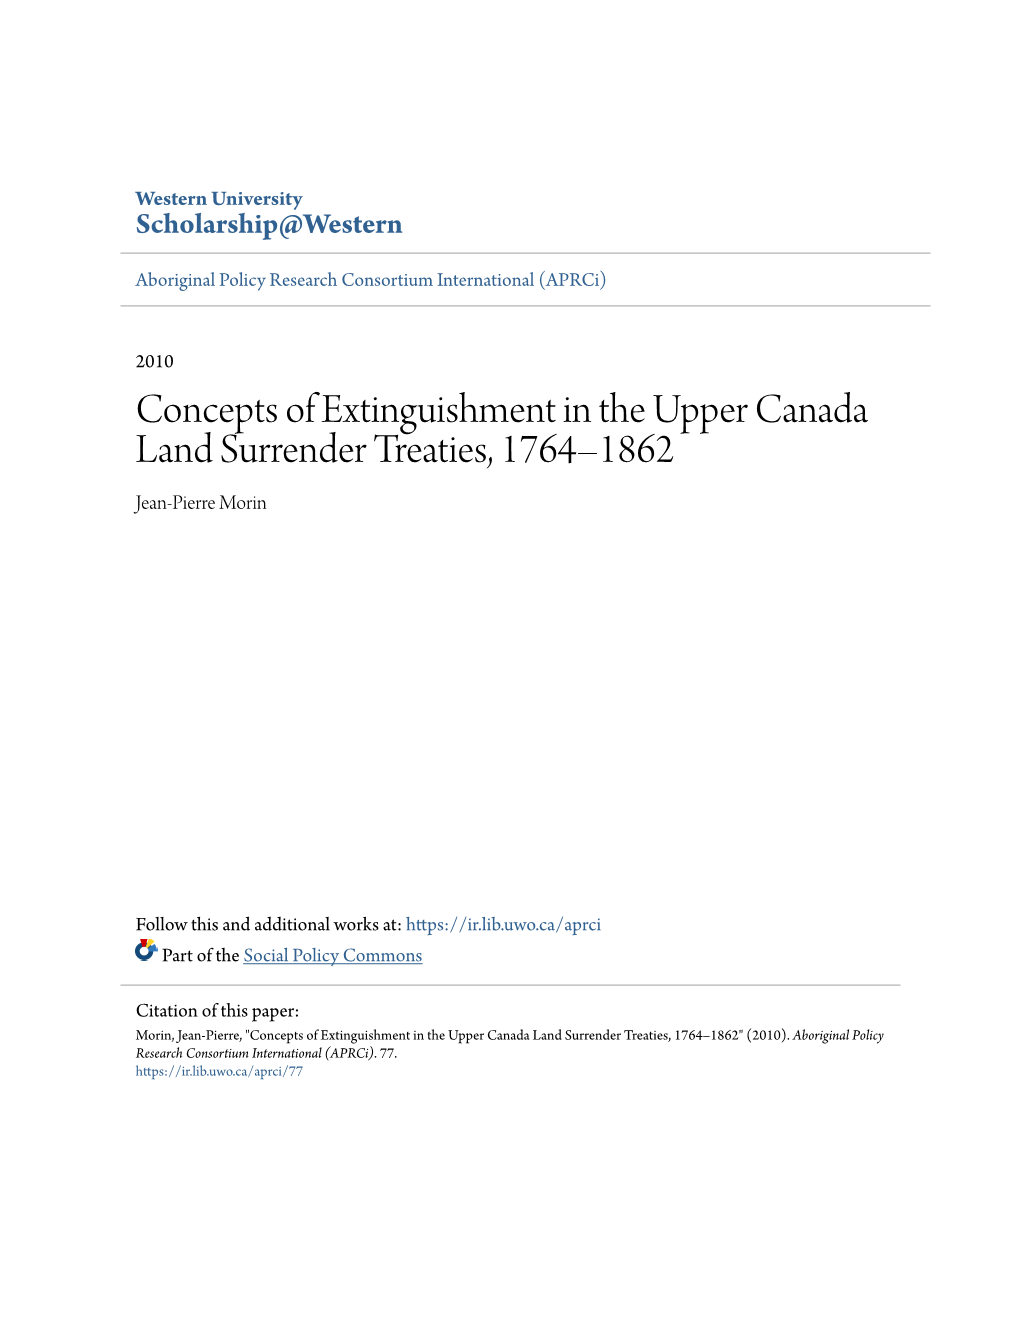 Concepts of Extinguishment in the Upper Canada Land Surrender Treaties, 1764–1862 Jean-Pierre Morin